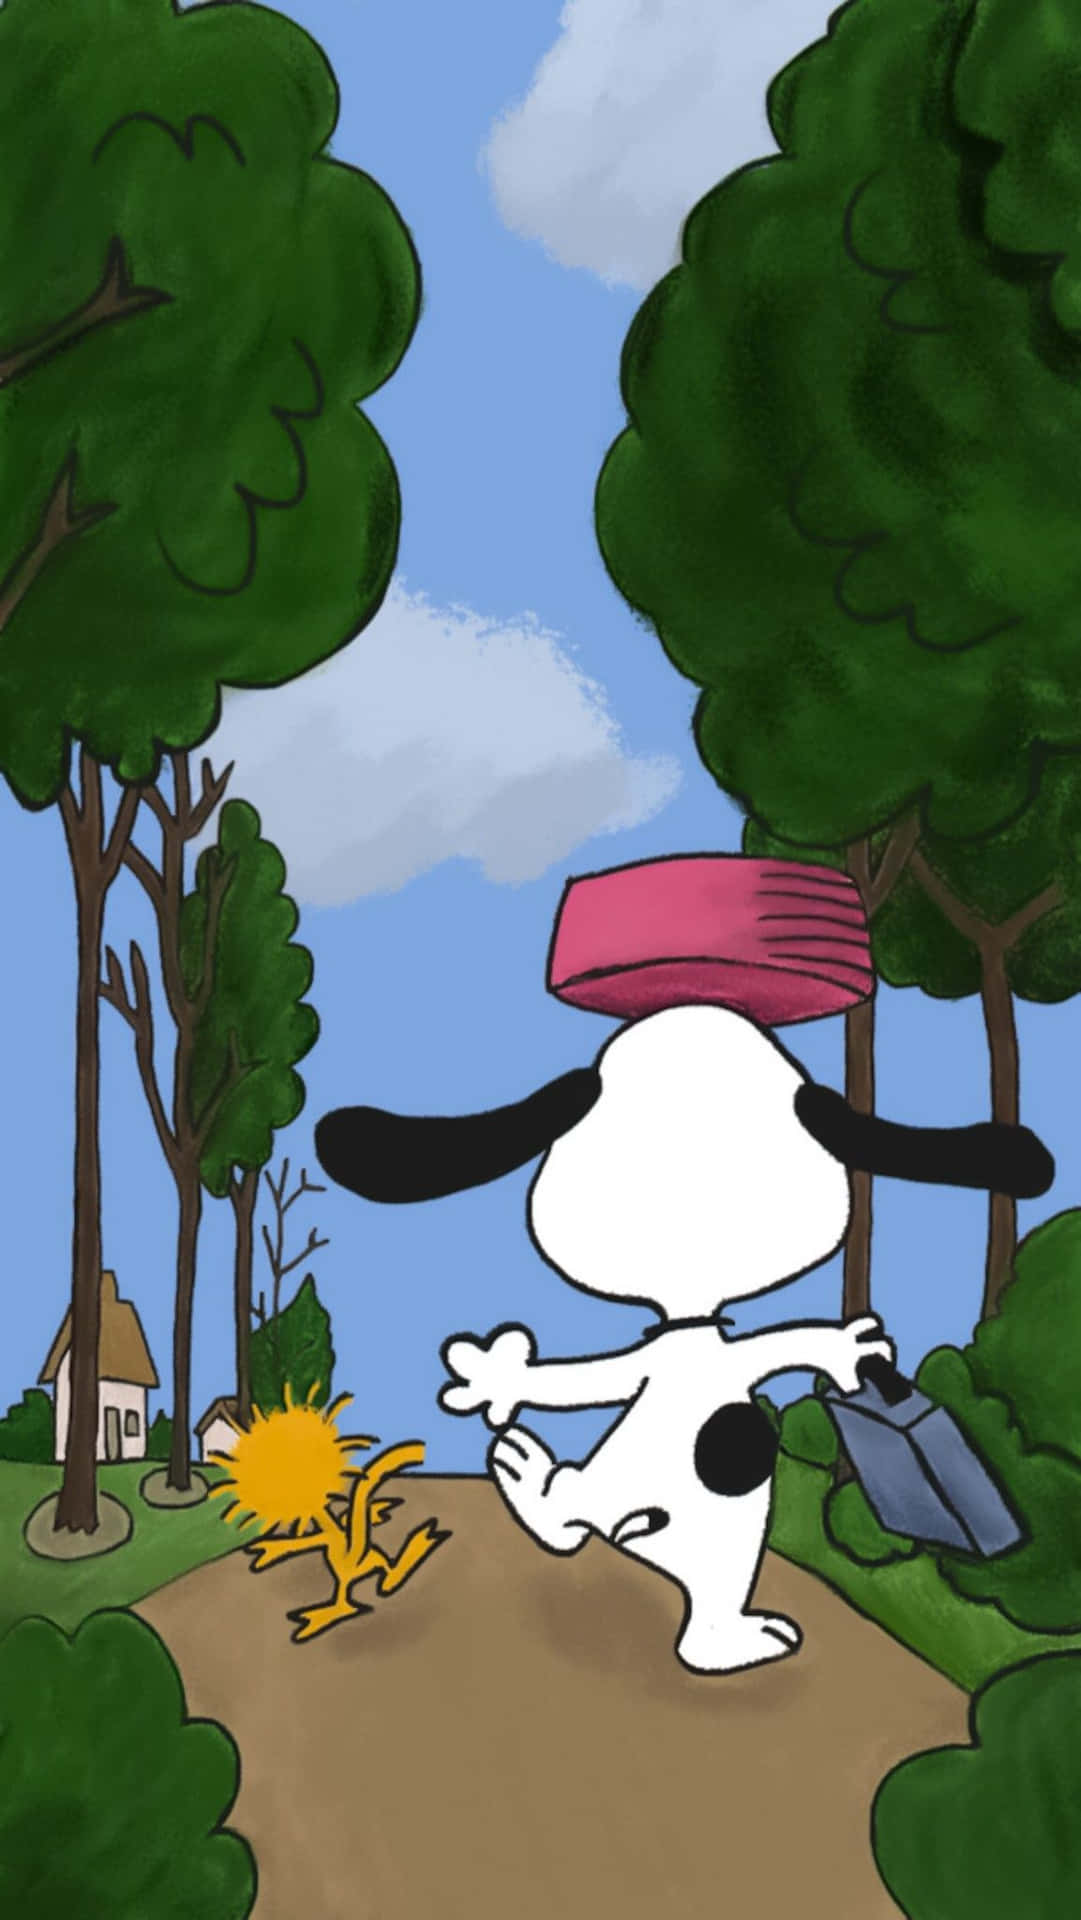 Everyone's favorite Beagle, Snoopy!